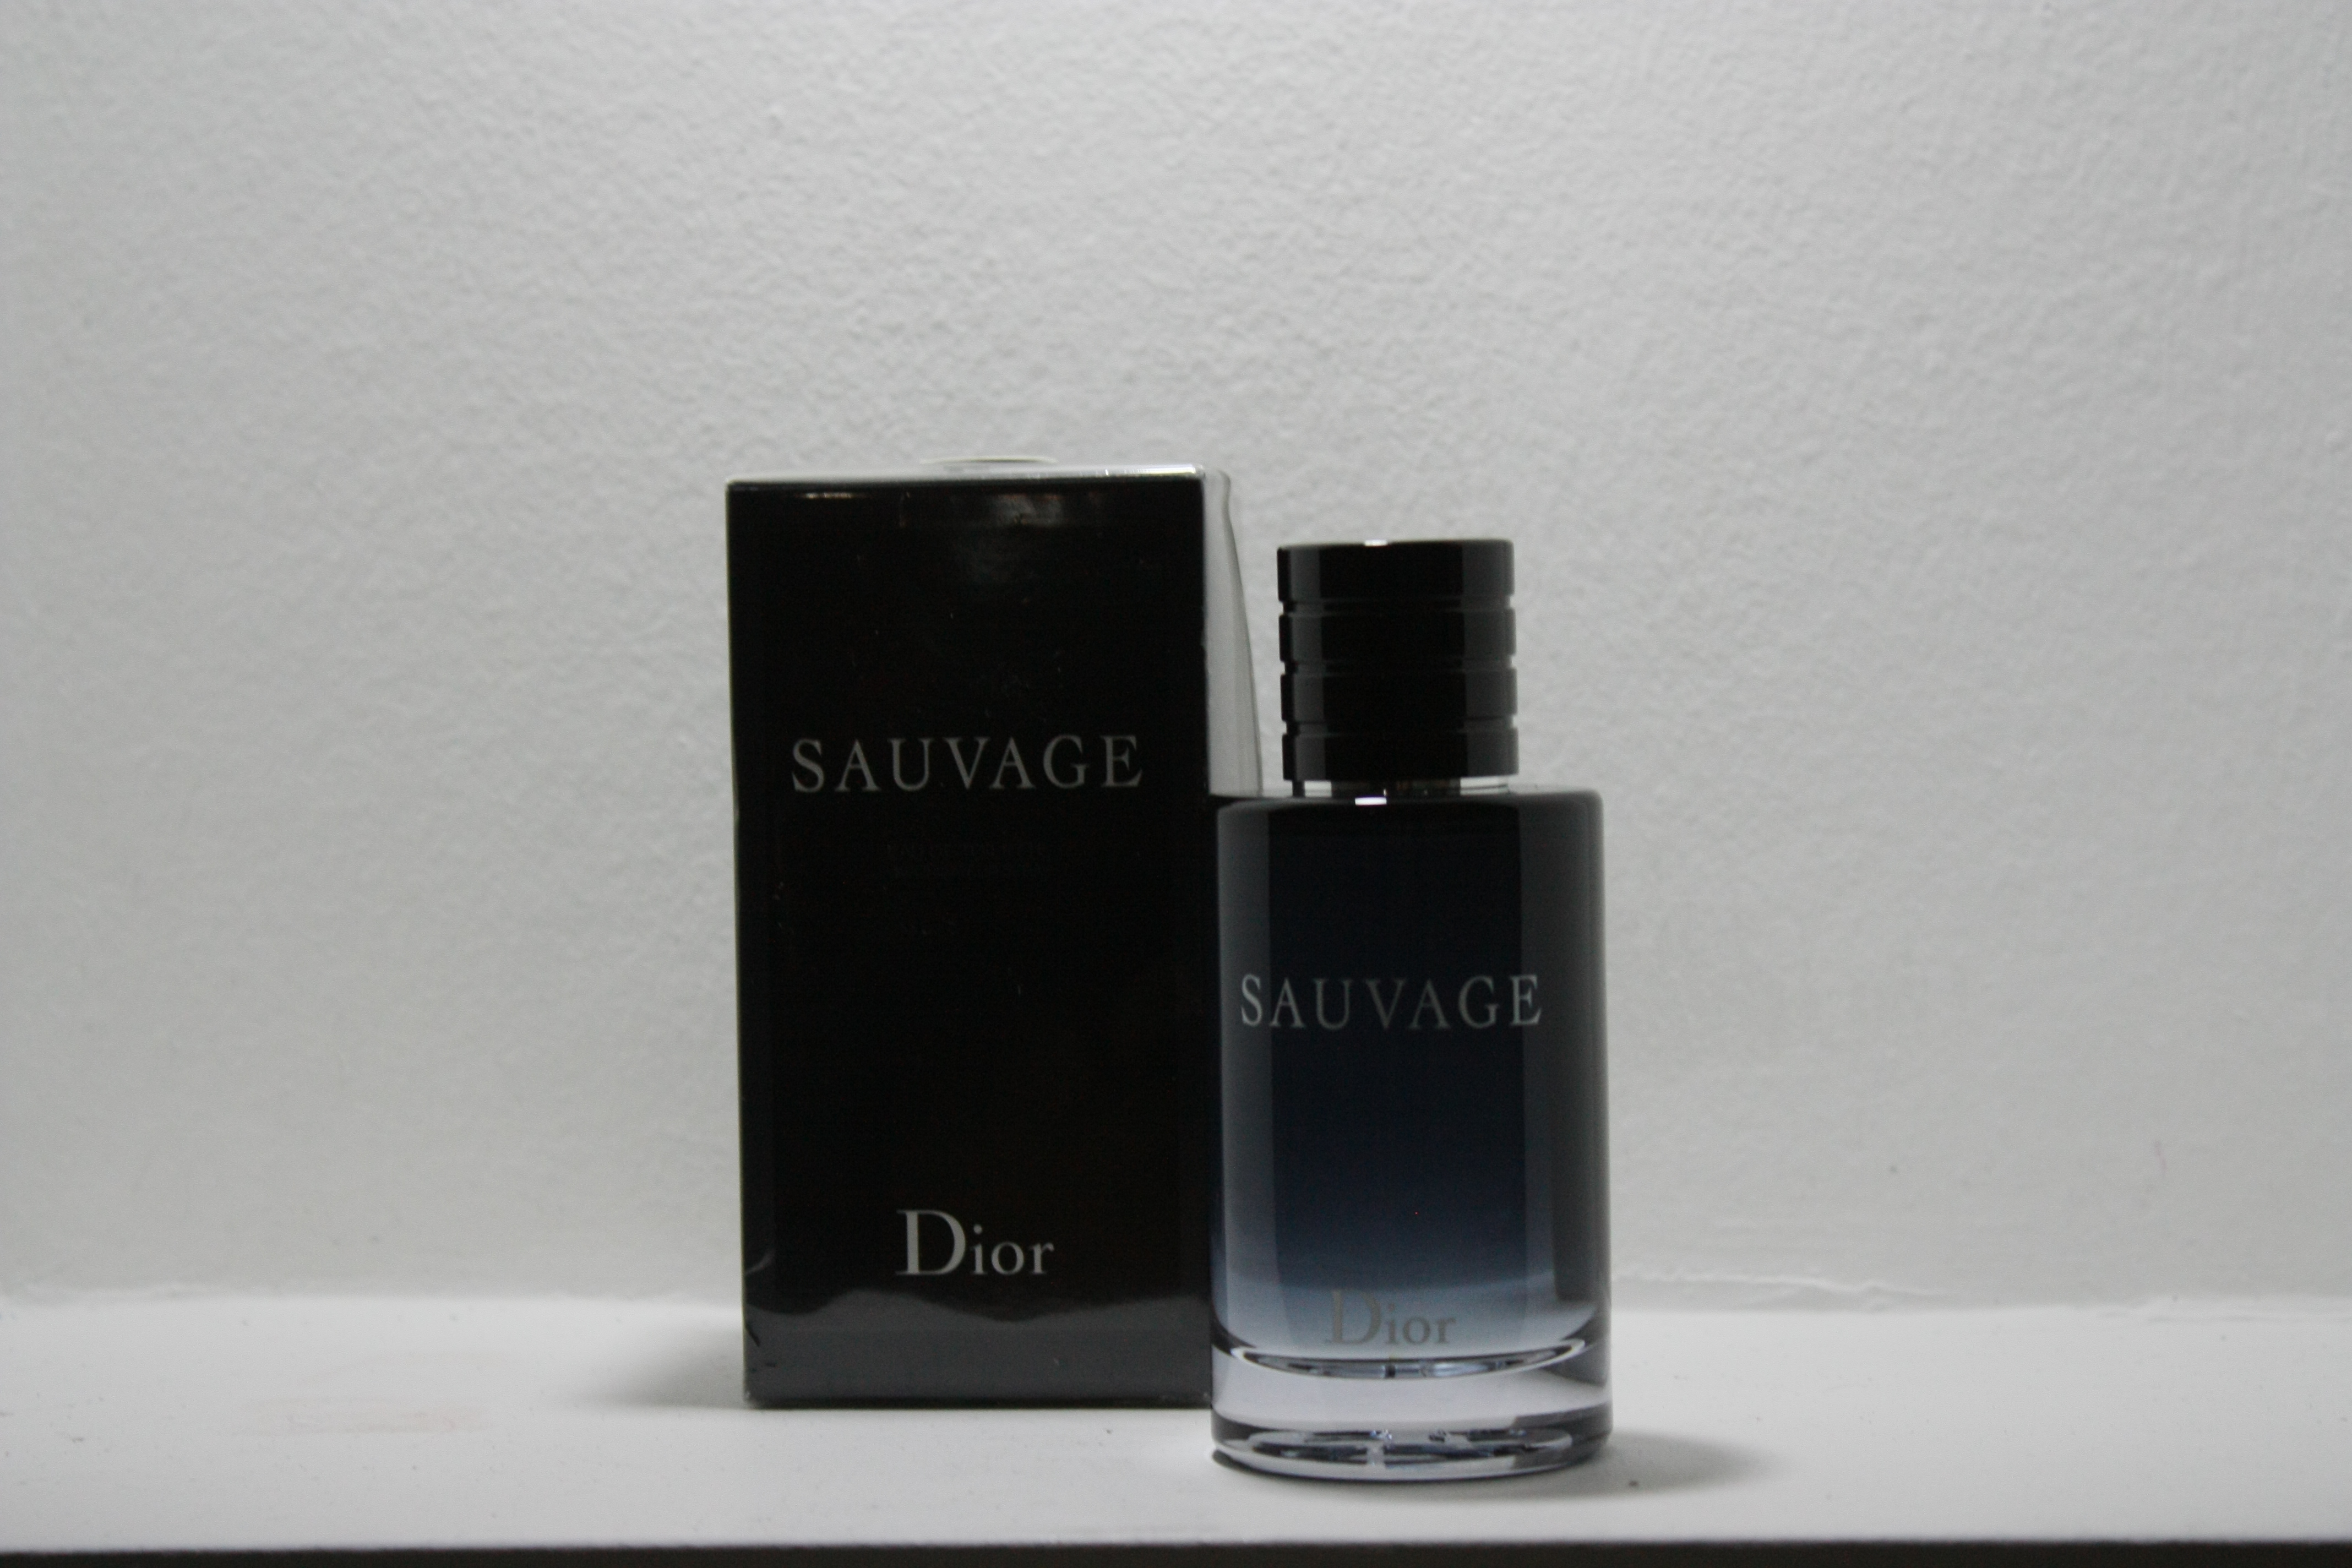 salud y belleza - Sauvage by Christian Dior 